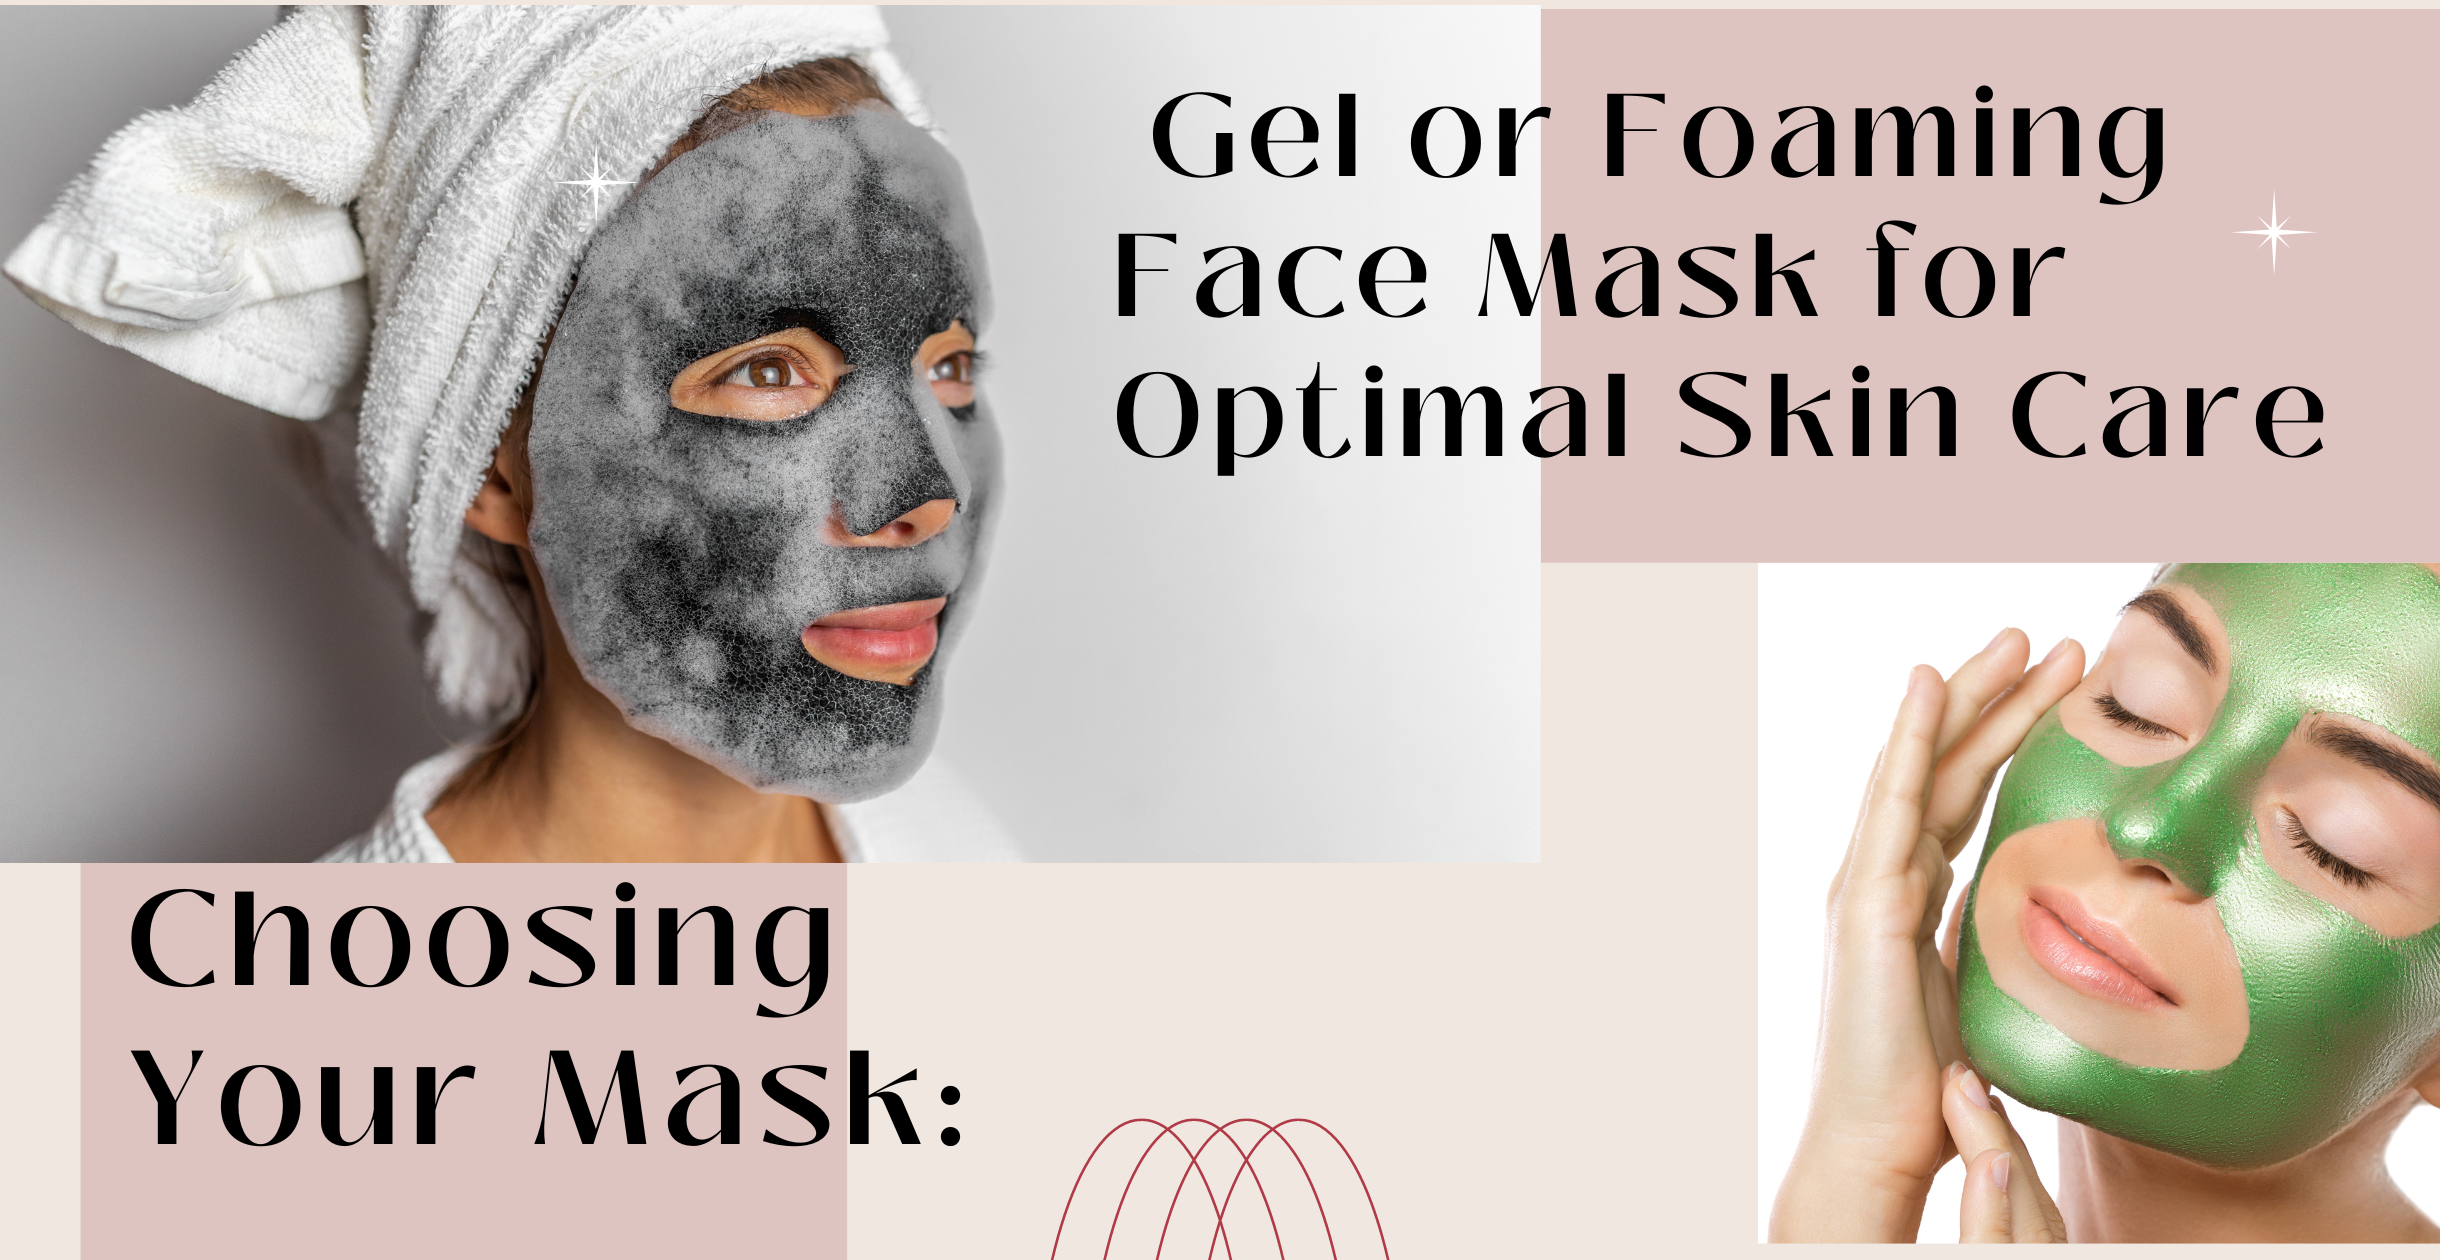 Choosing Your Mask: Gel or Foaming Face Mask for Optimal Skin Care